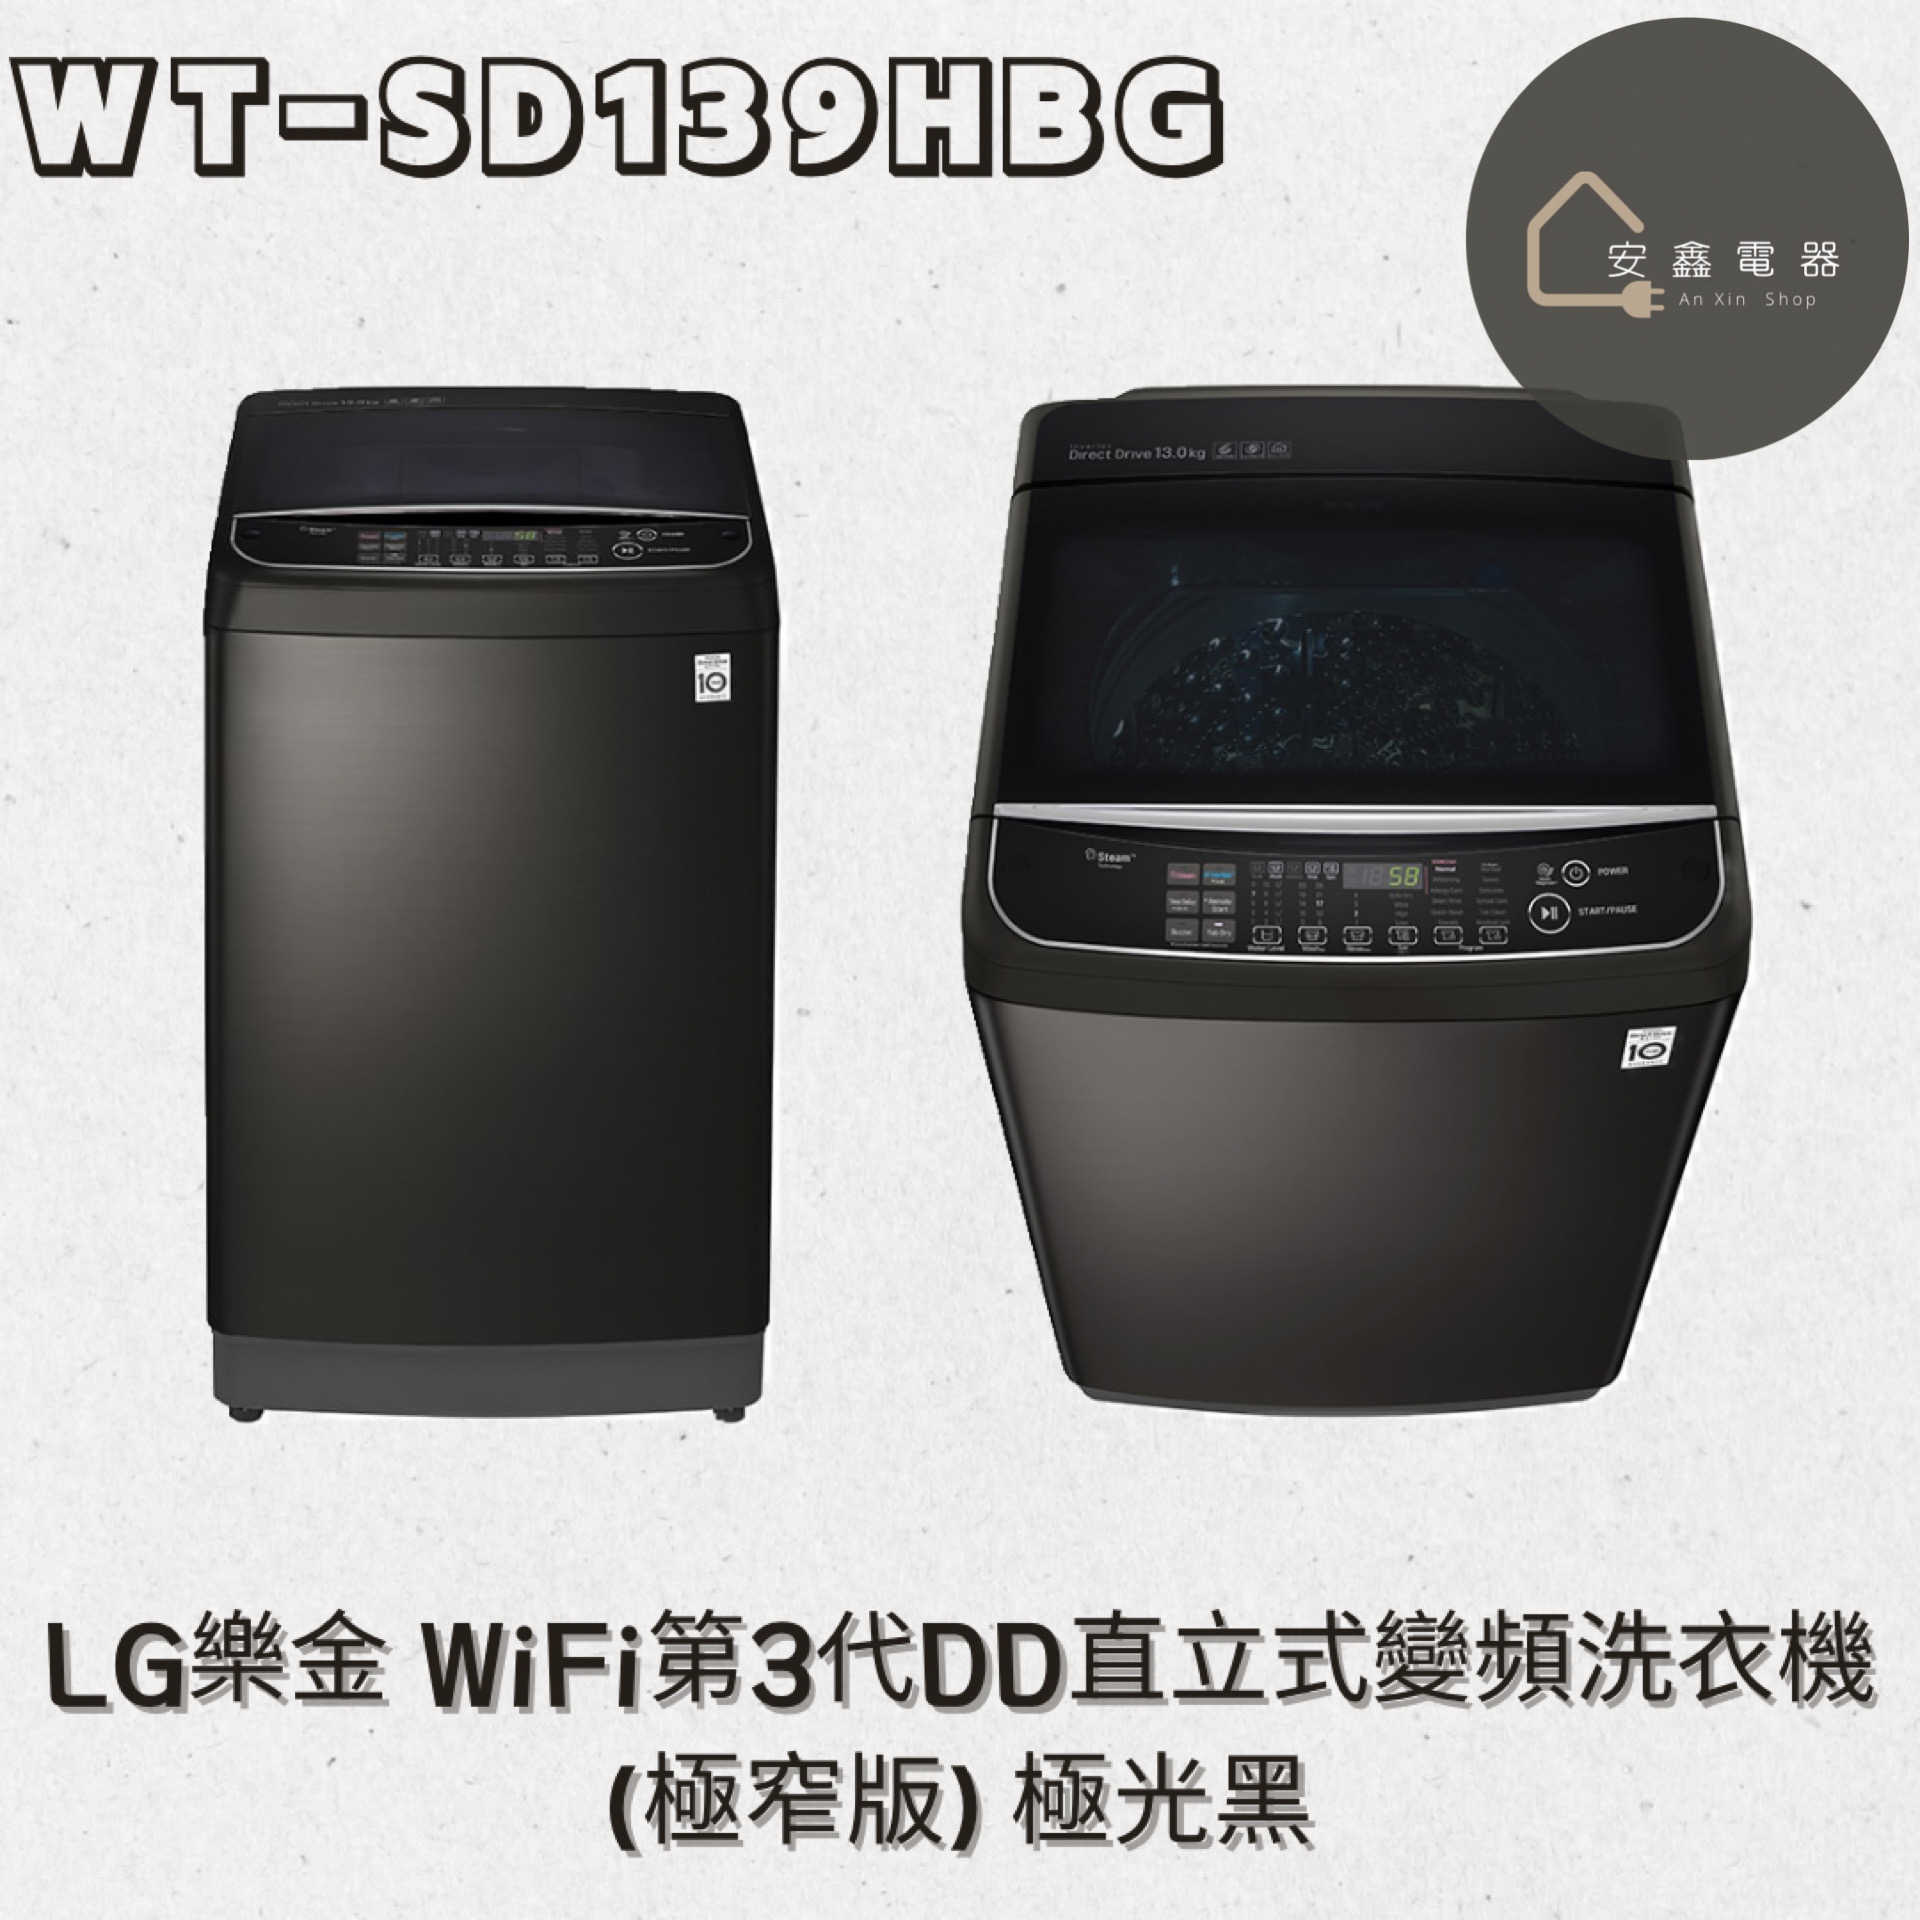 LG樂金 WiFi第3代DD直立式變頻洗衣機(極窄版) 極光黑/WT-SD139HBG